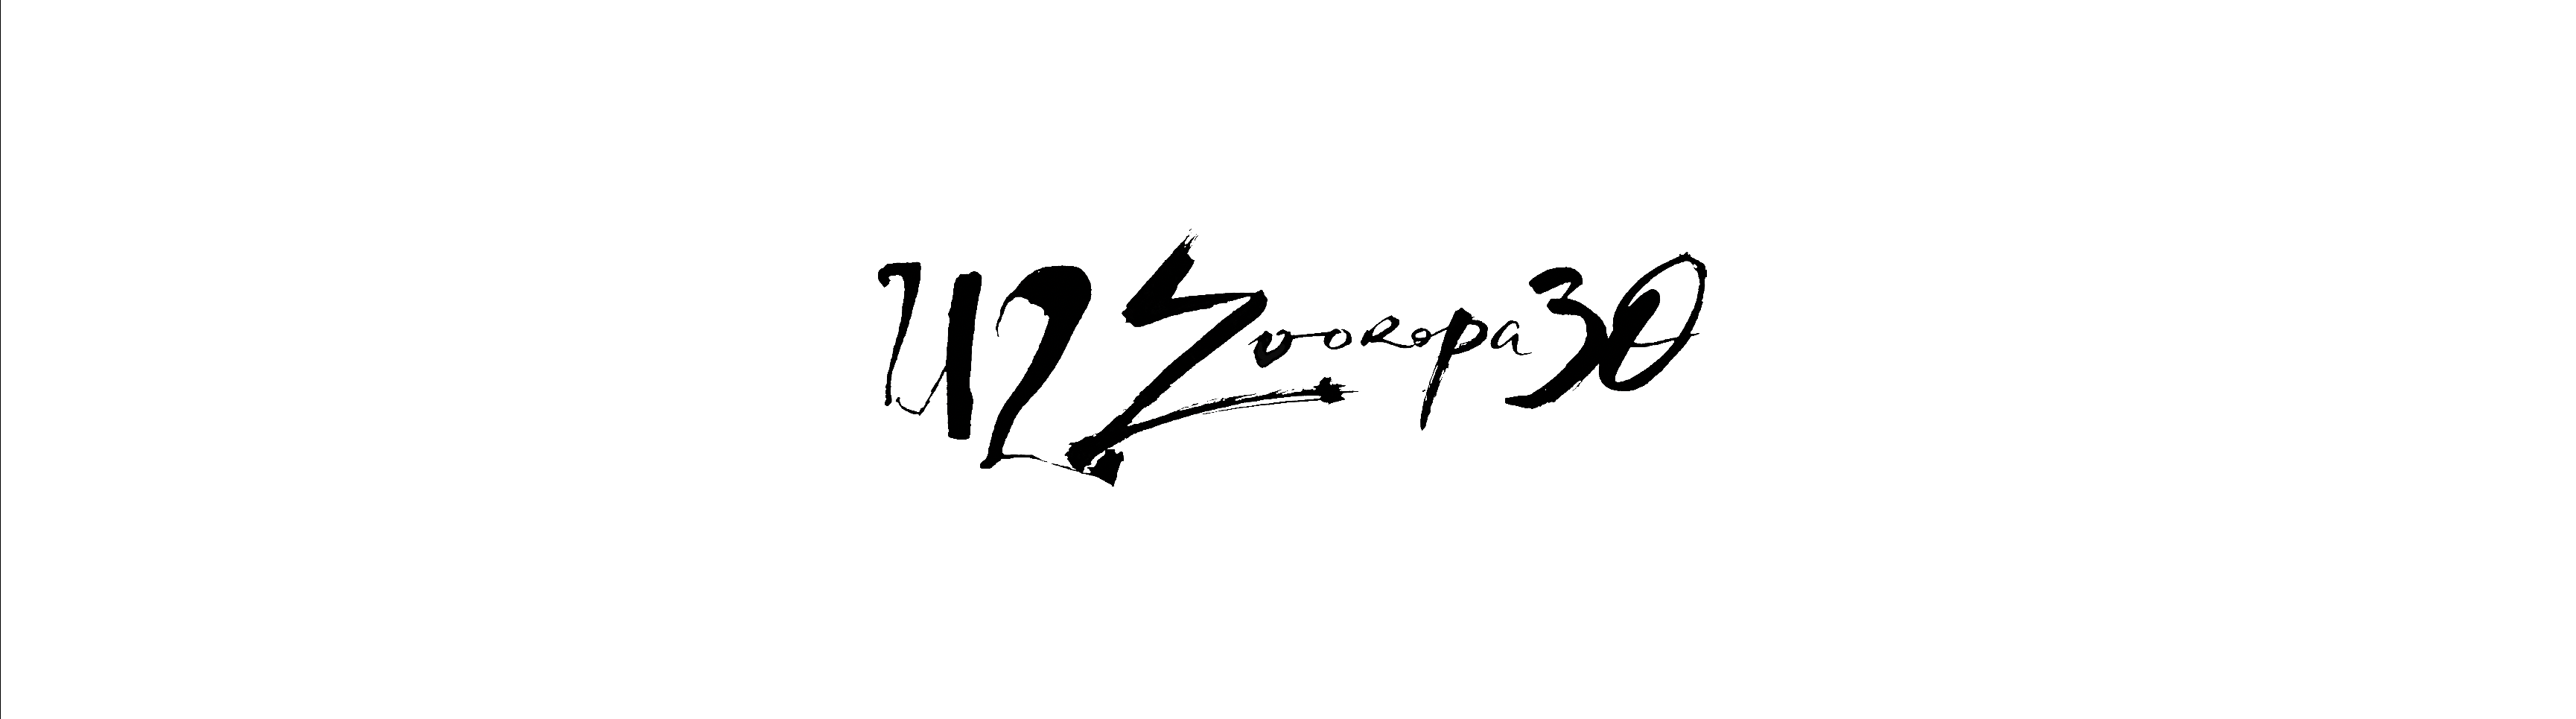 U2 zooropa 30 Banner